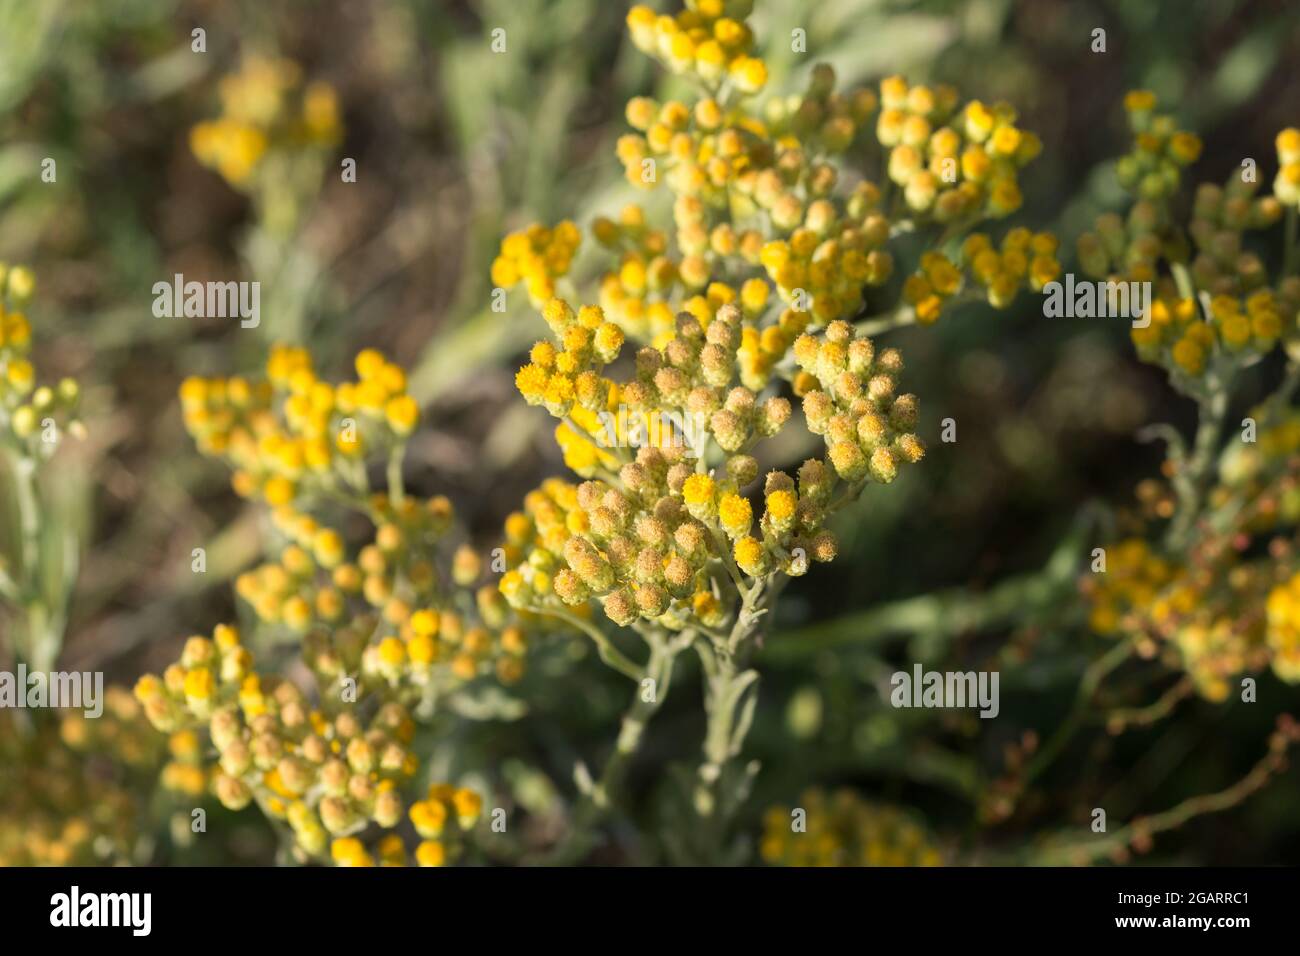 Helichrysum arenarium, dwarf everlast, yellow flowers closeup selective focus on suny day Stock Photo